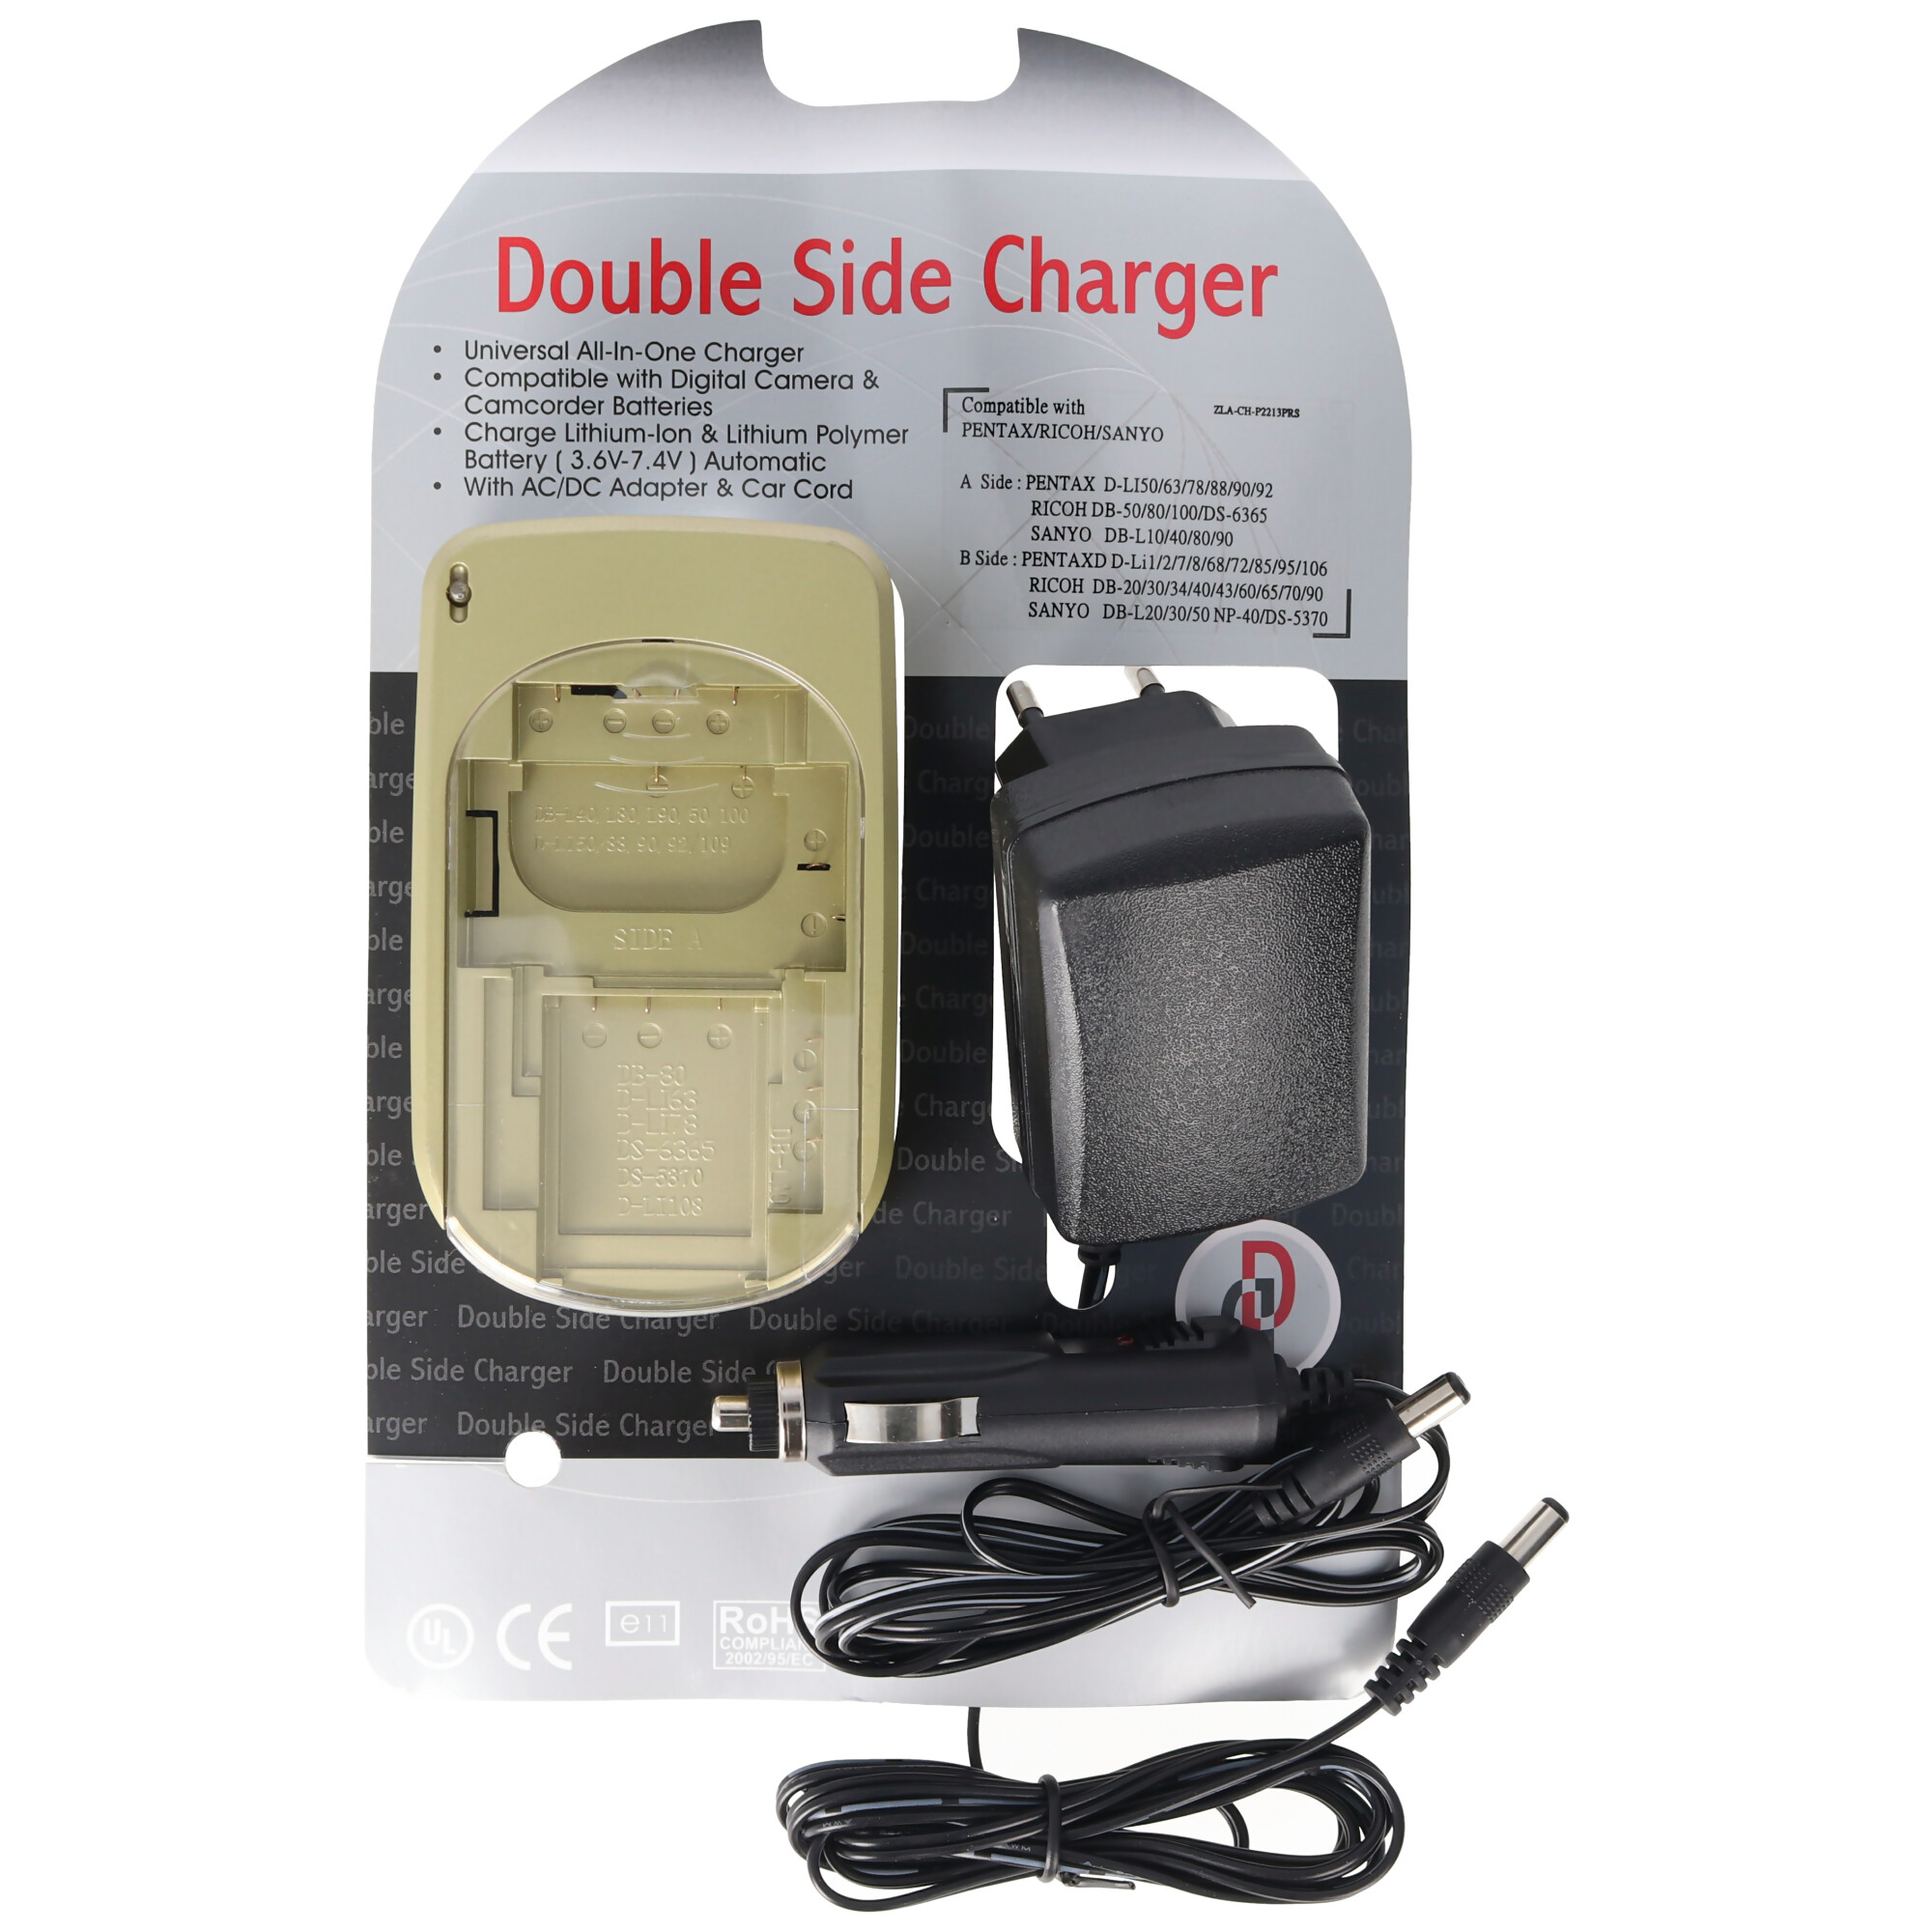 Double-side charger für Digital-Kamera und Camcorder Li-ion Akku, PEN, RIC, Sanyo